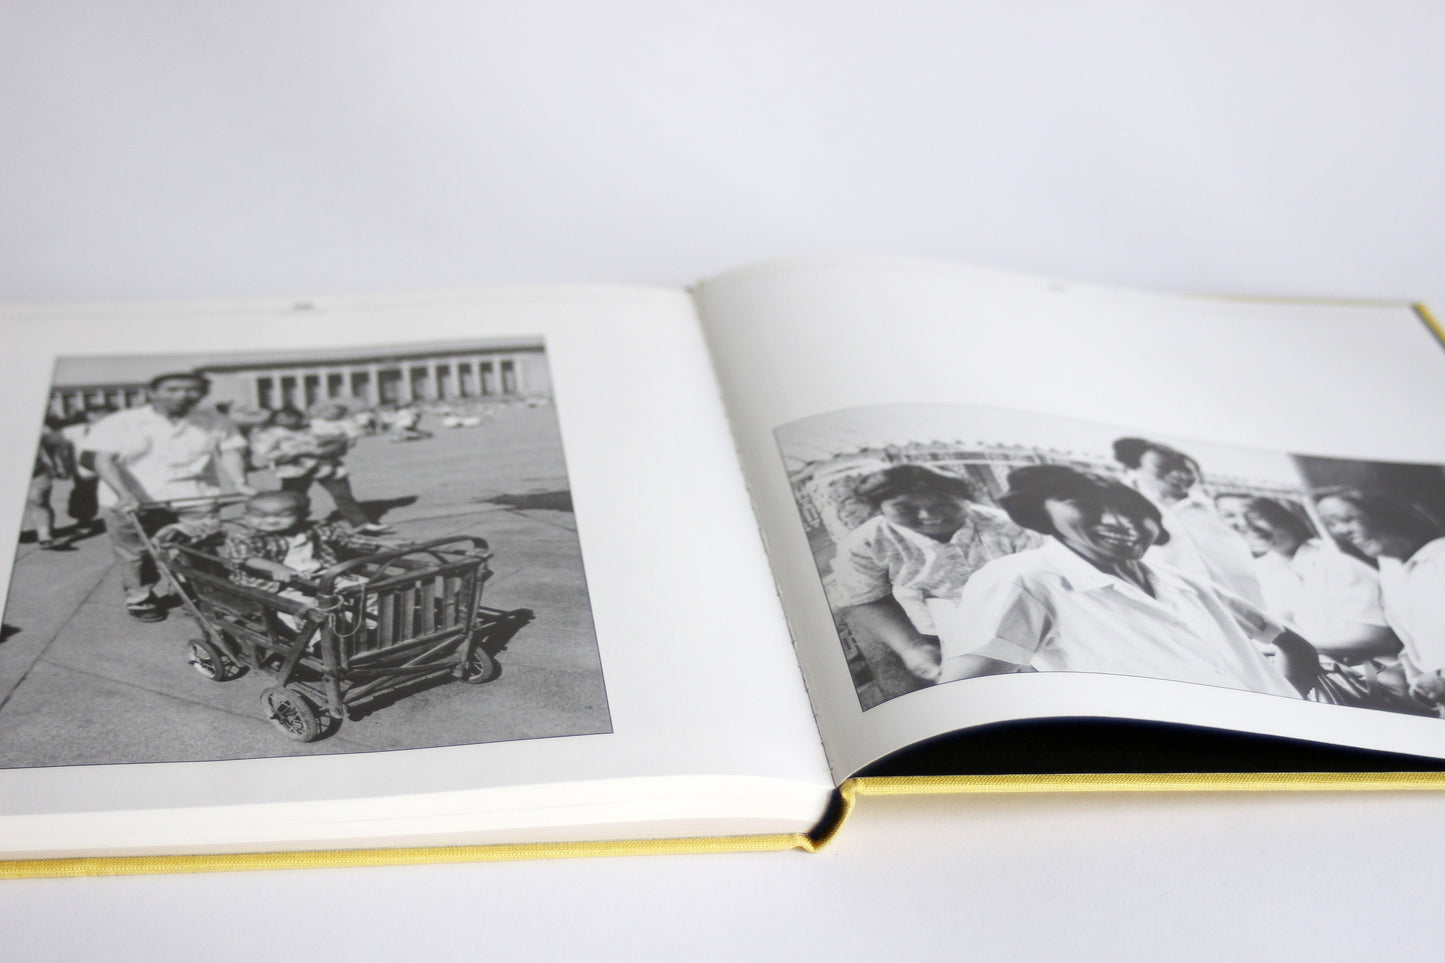 Peking, Karol Kallay und Otto Mann, 1989 / Vintage photo travel book / Photo book / Coffee table book